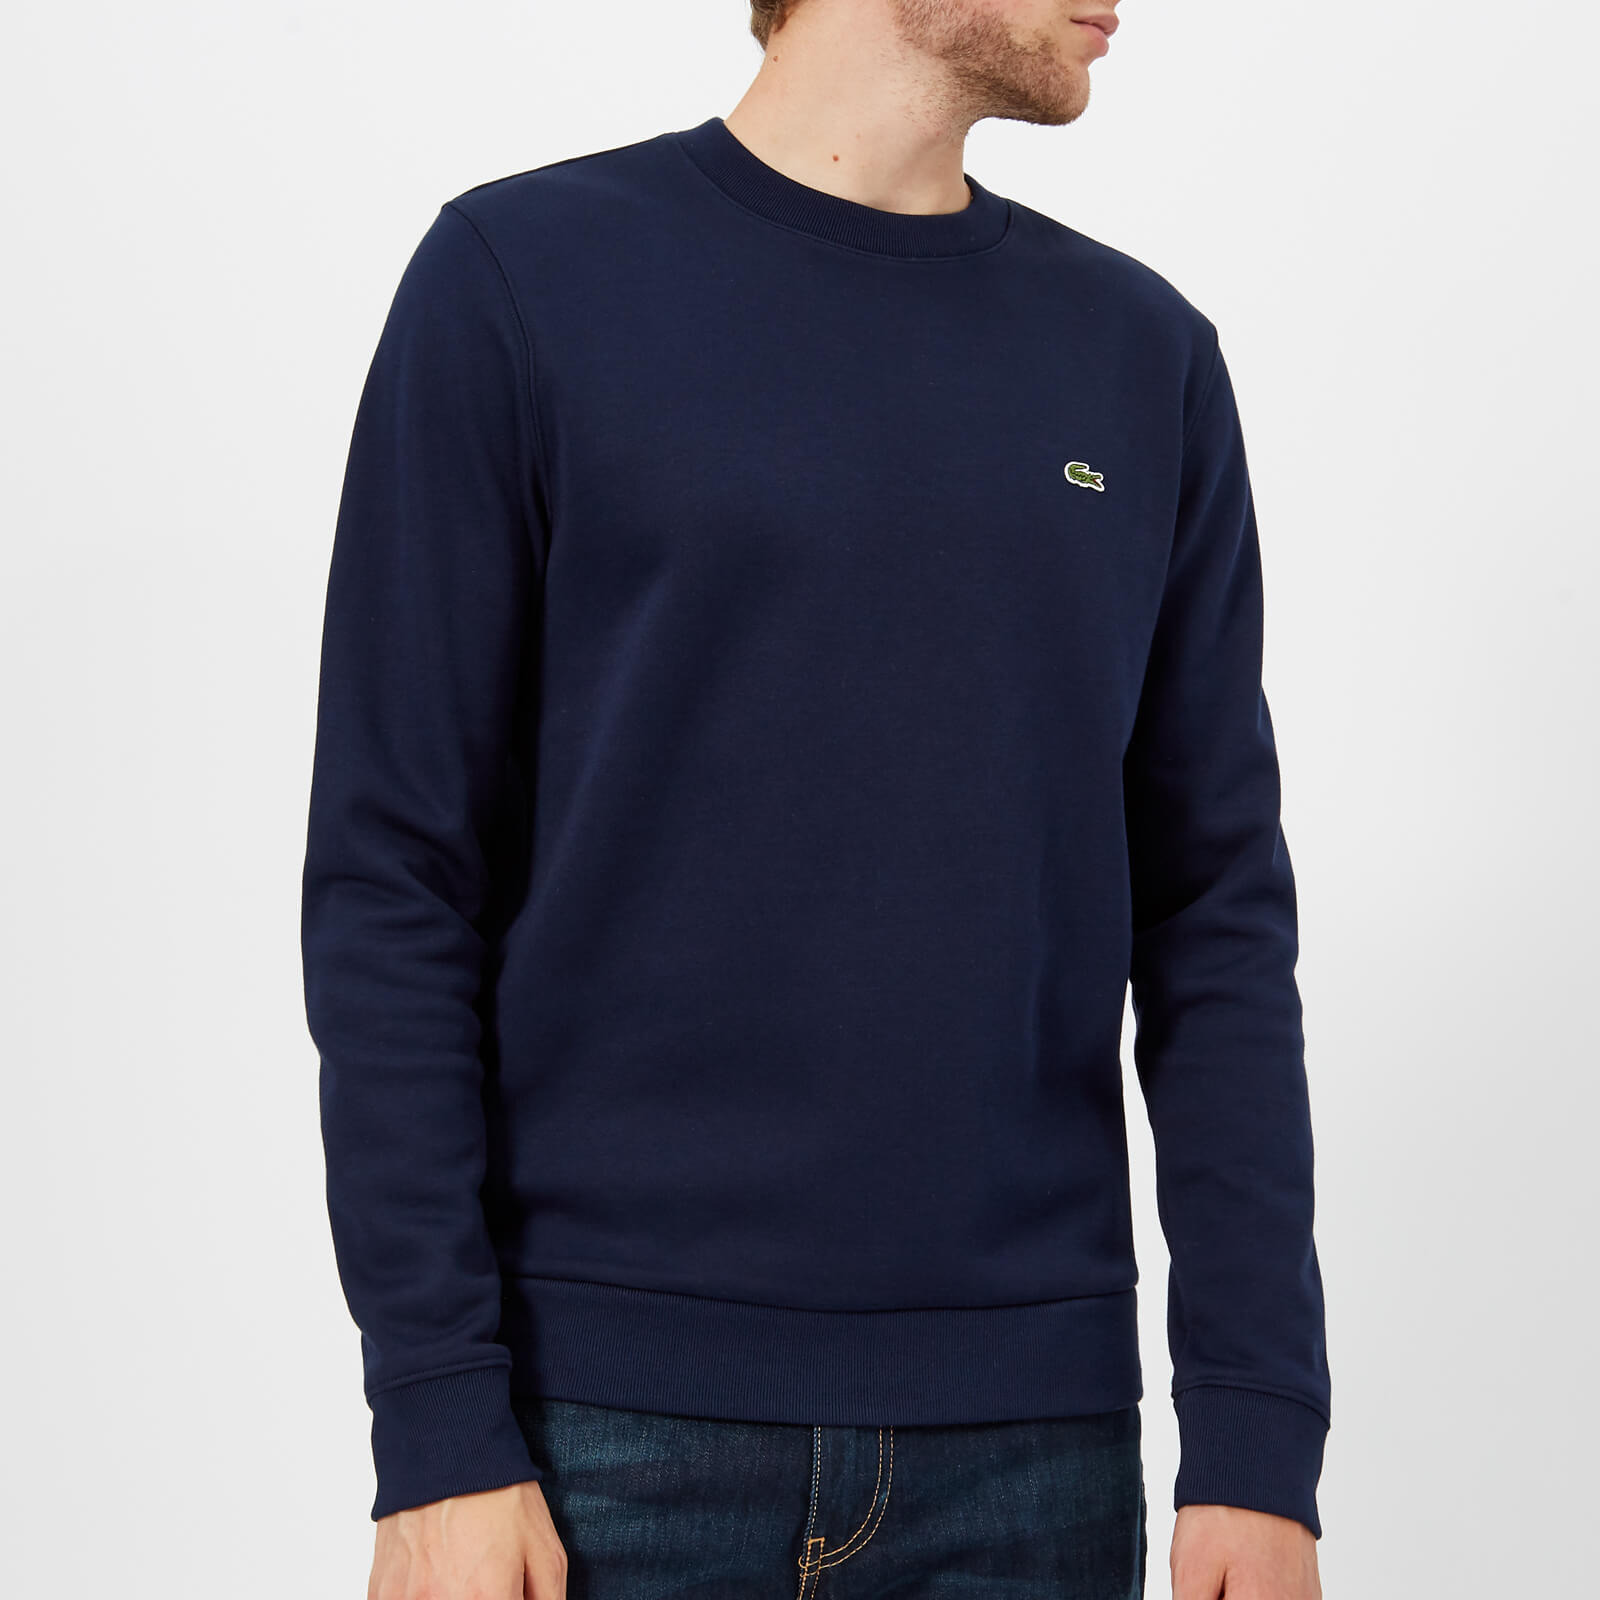 lacoste navy blue sweatshirt